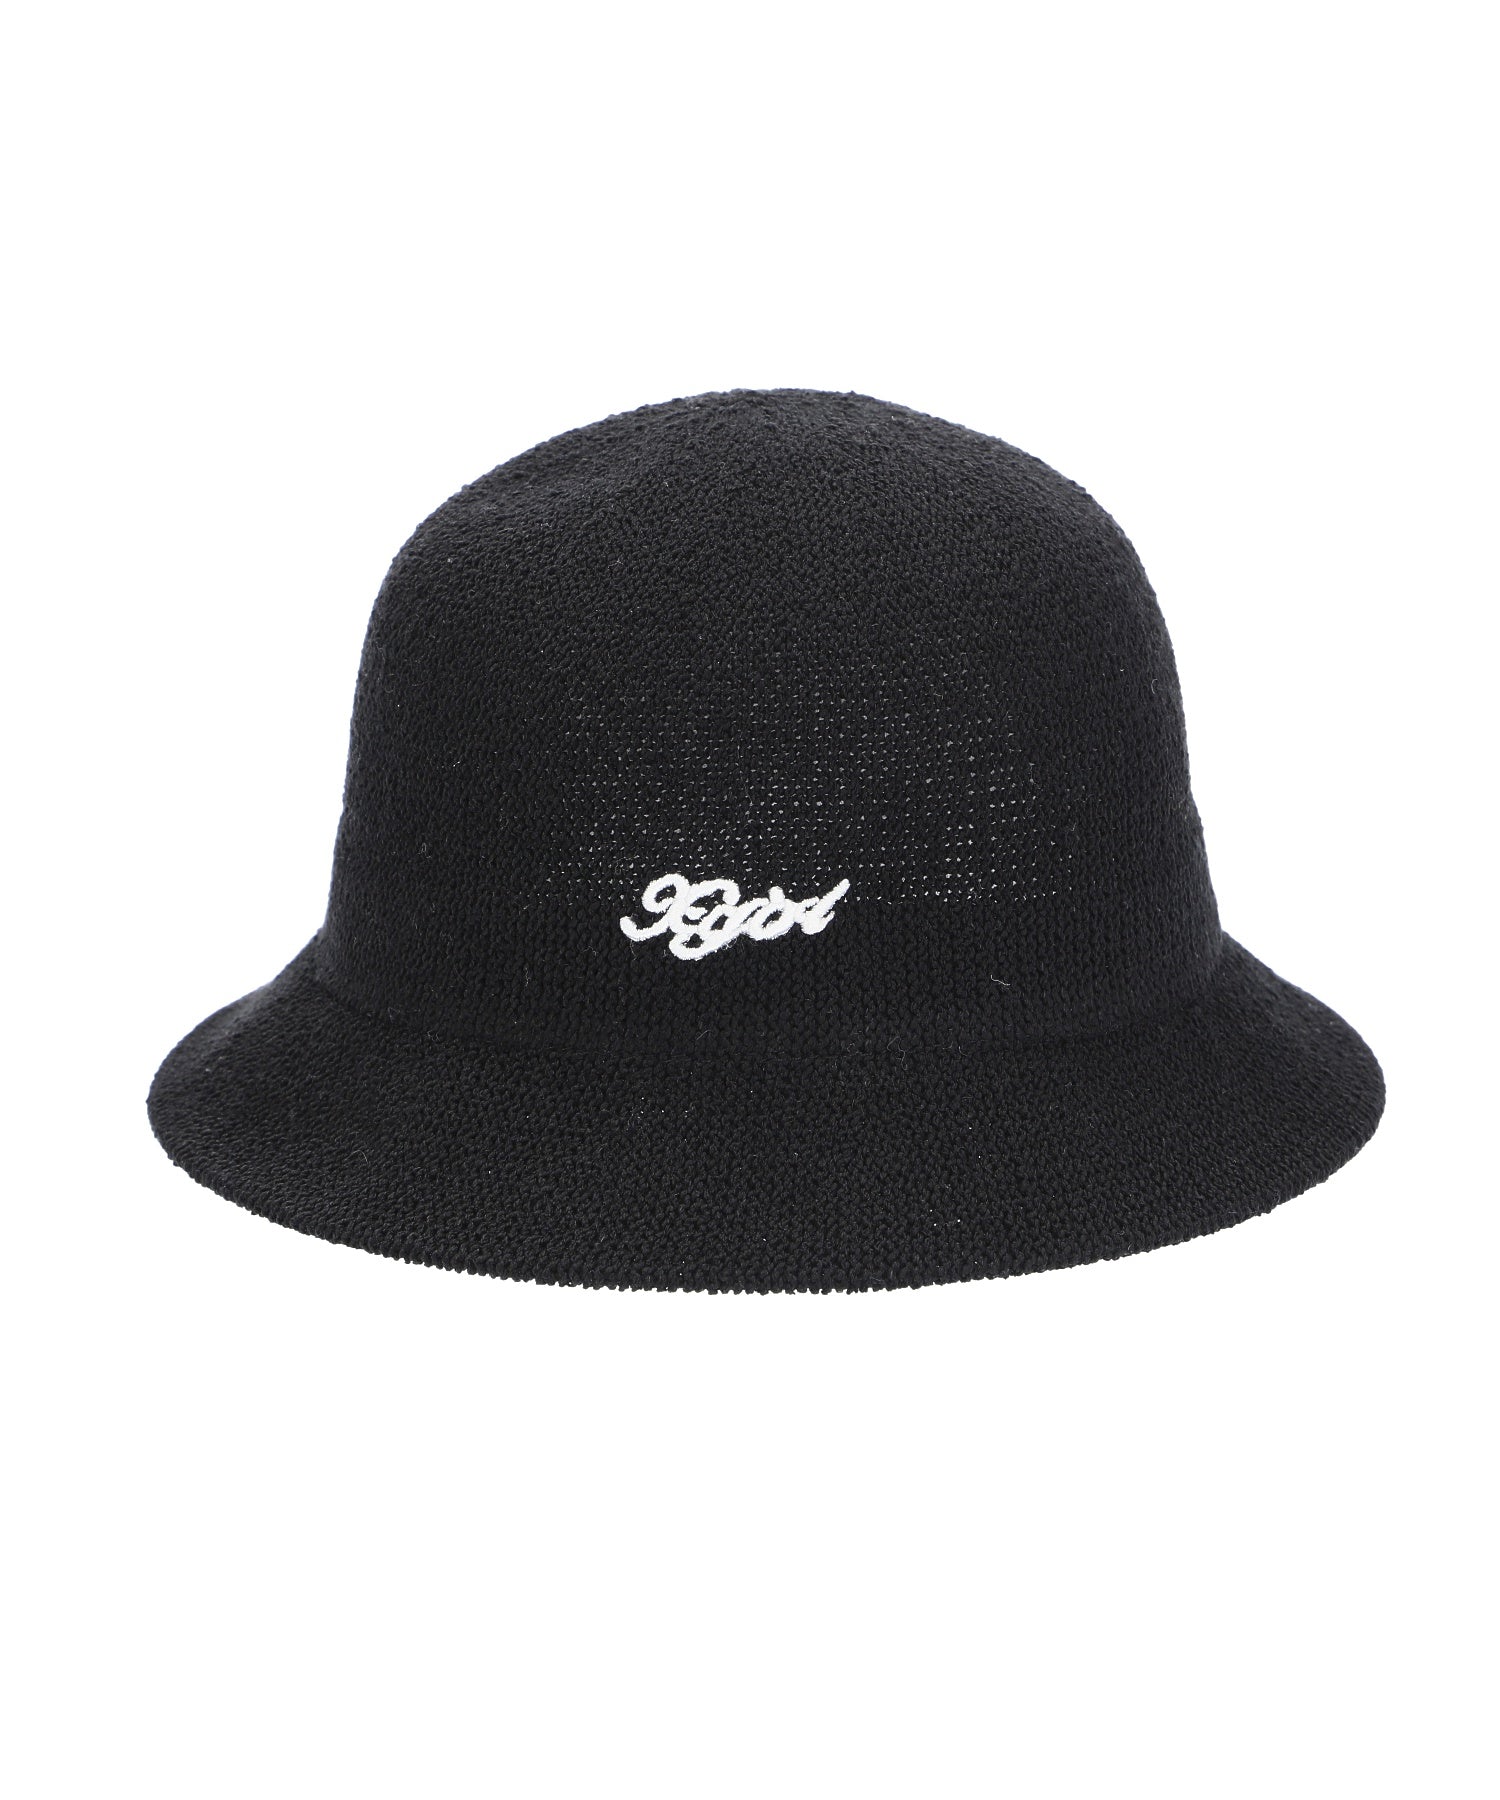 LOGO BUCKET HAT